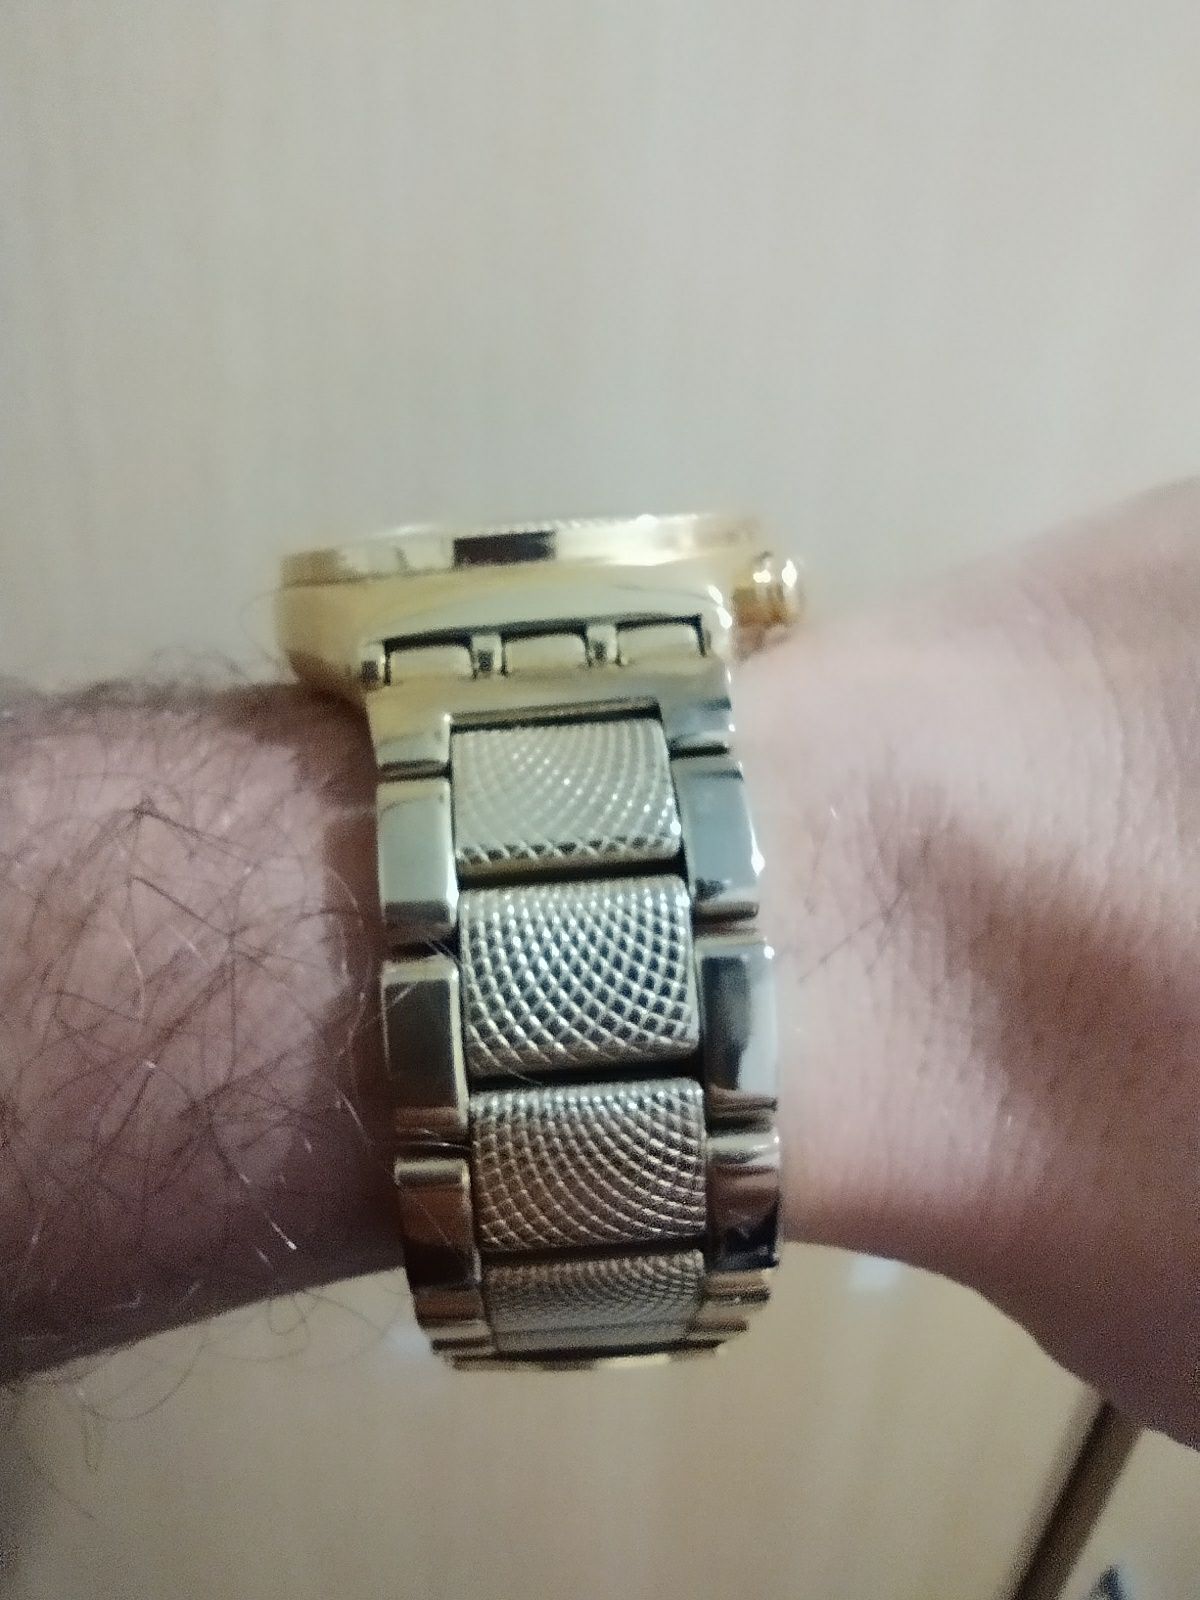 Relógio Swatch dourado